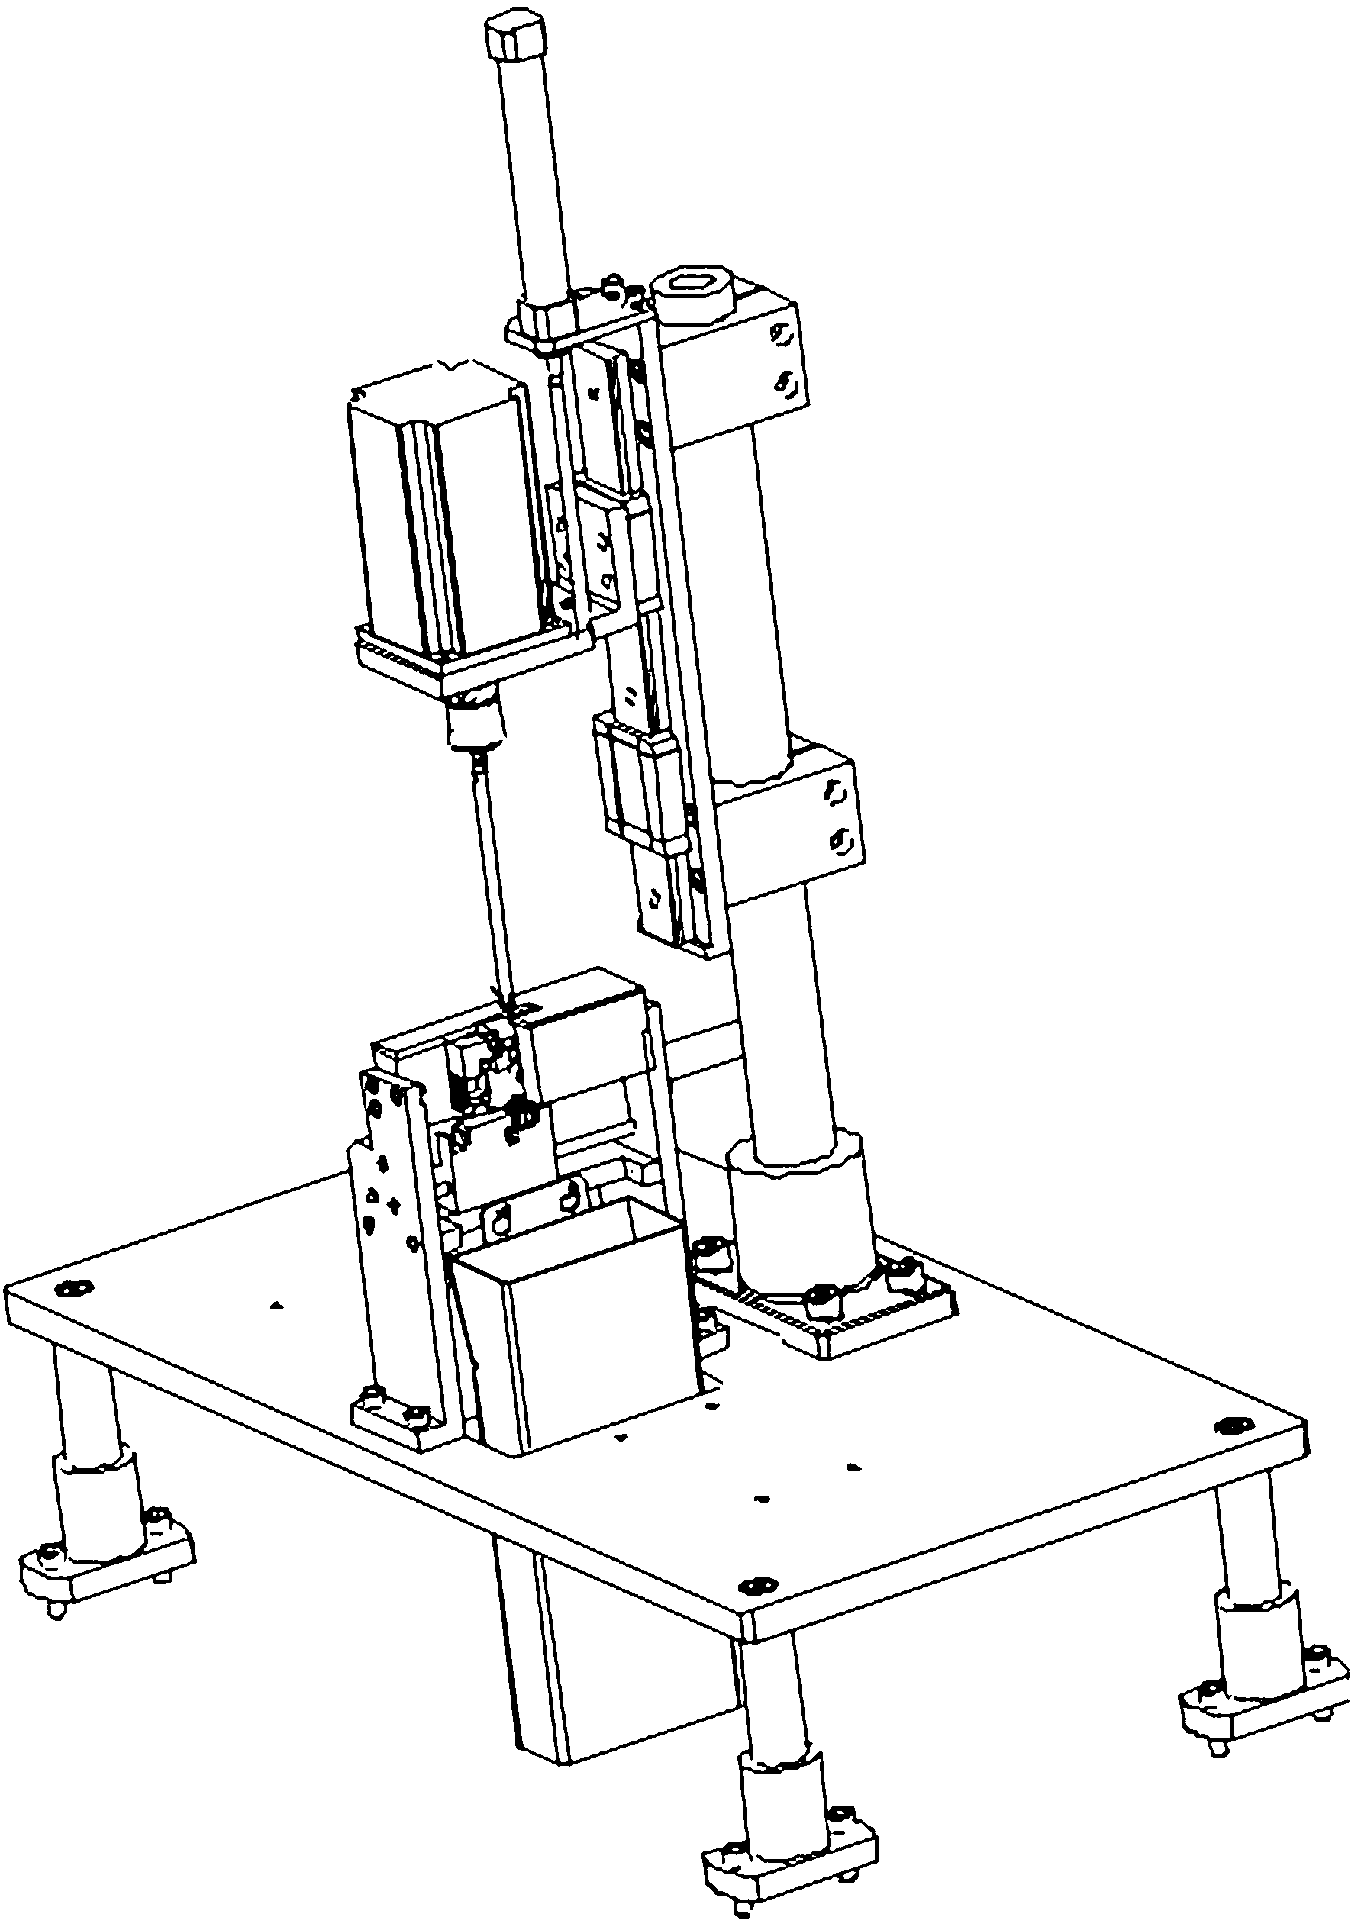 Thread pair automatic assembling machine